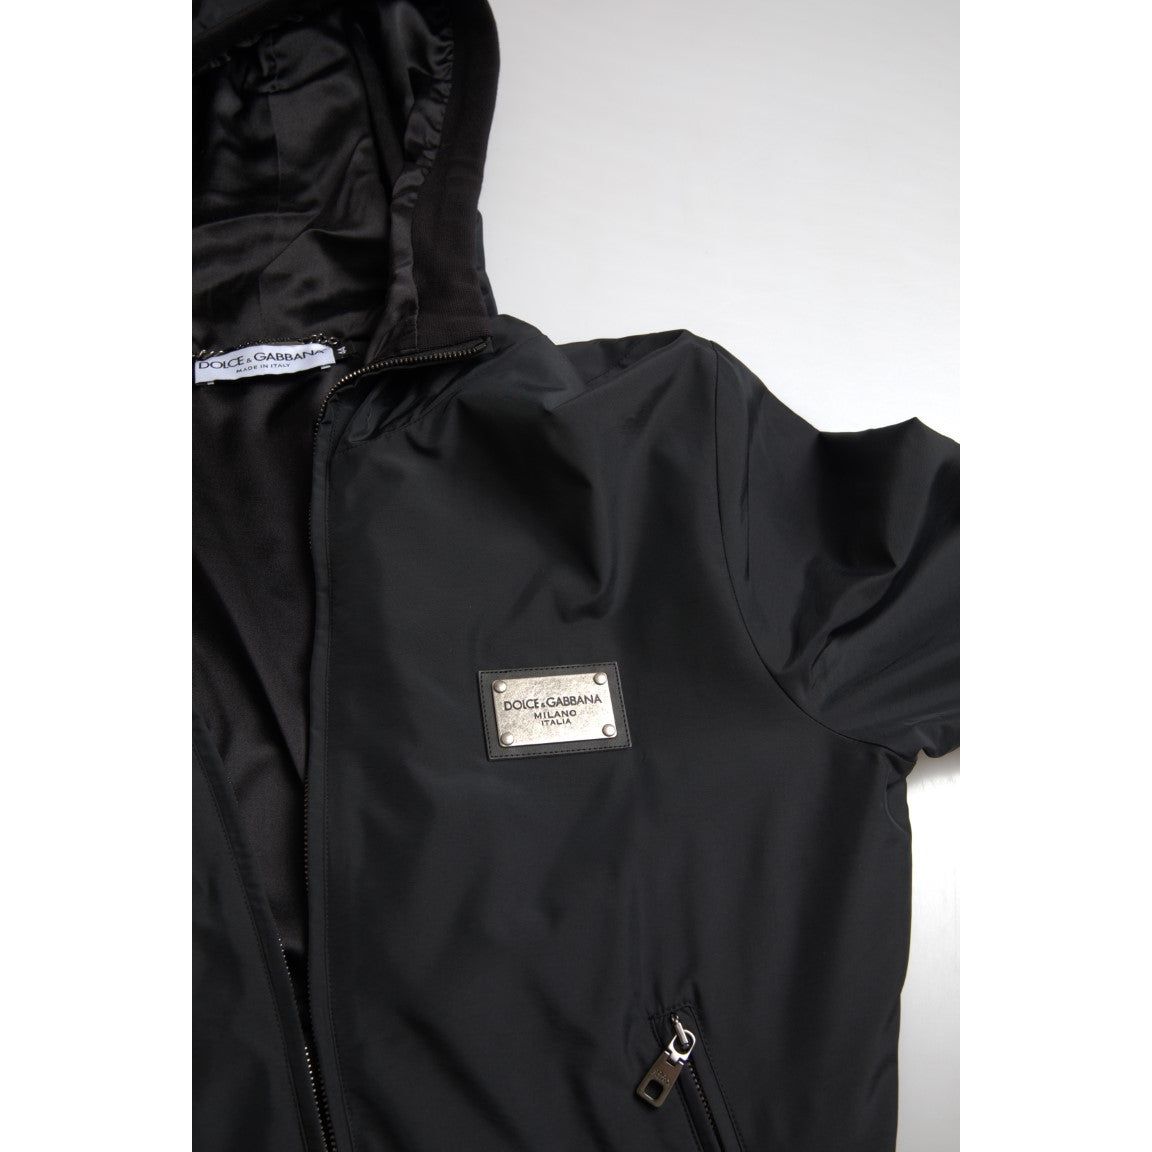 Dolce & Gabbana Elegant Black Hooded Sweatshirt with Logo Plaque black-hooded-nylon-bomber-full-zip-sweater